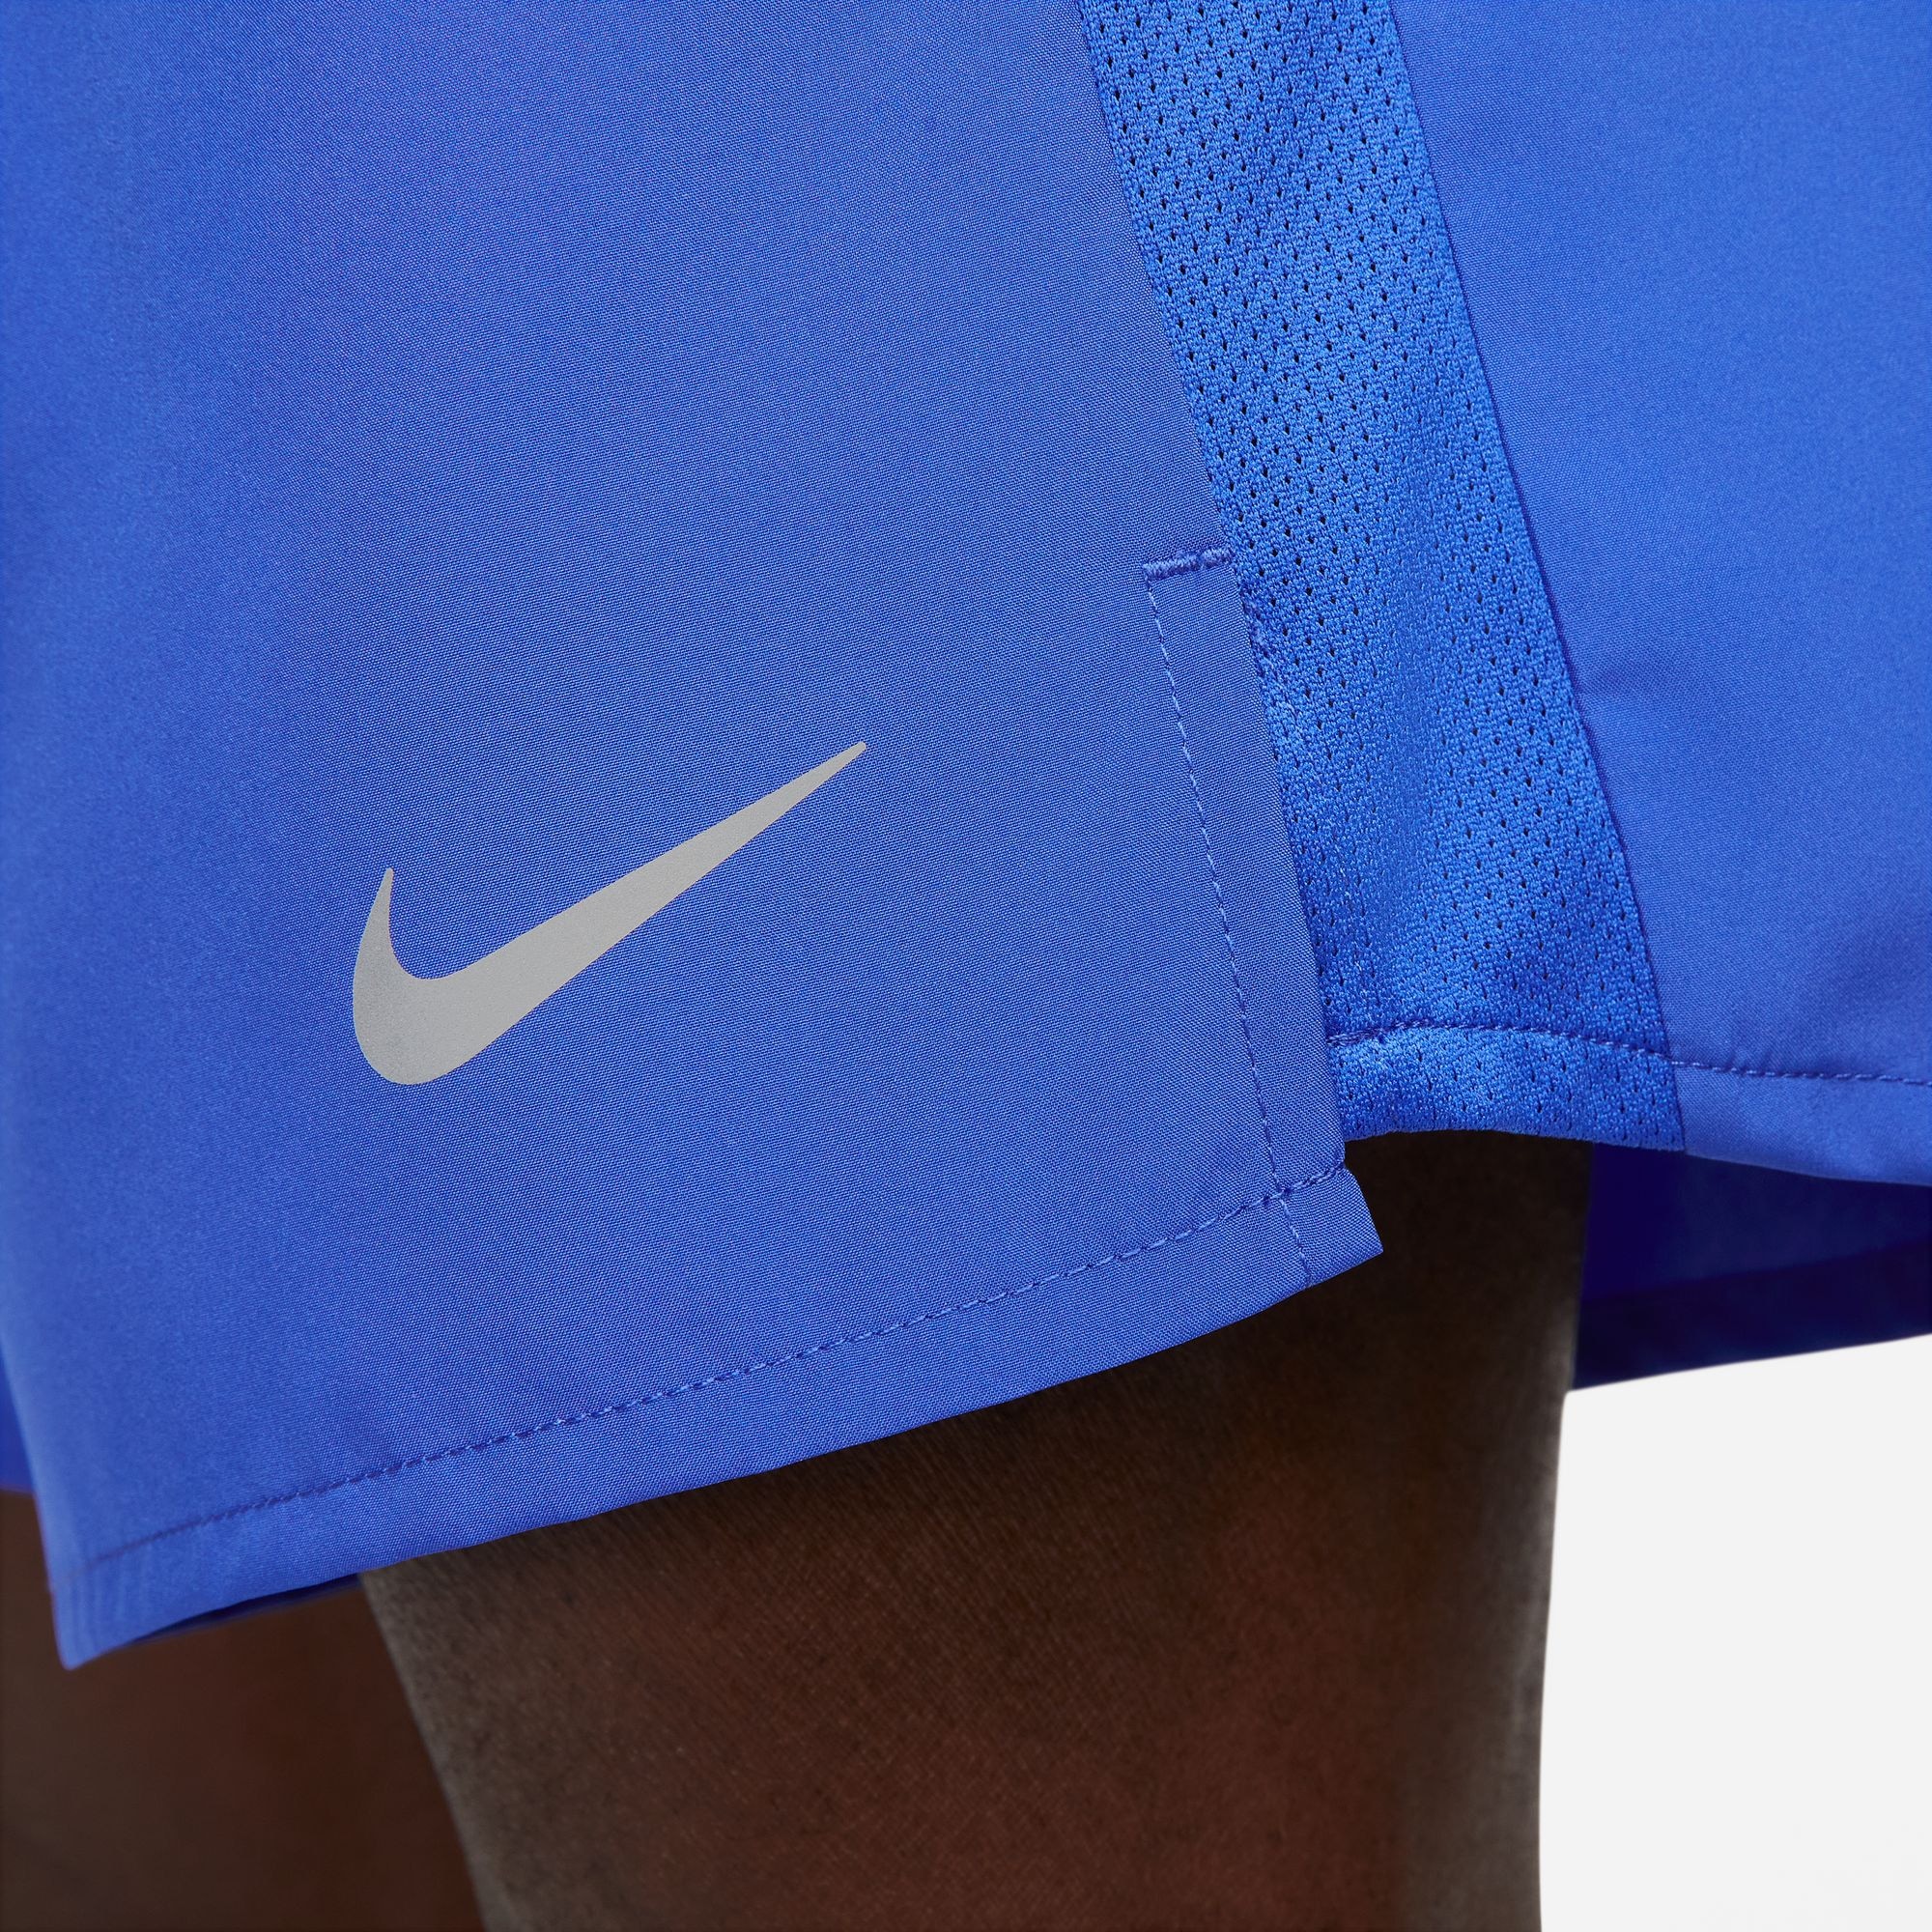 Nike Laufshorts »DRI-FIT CHALLENGER MEN'S UNLINED RUNNING SHORTS«